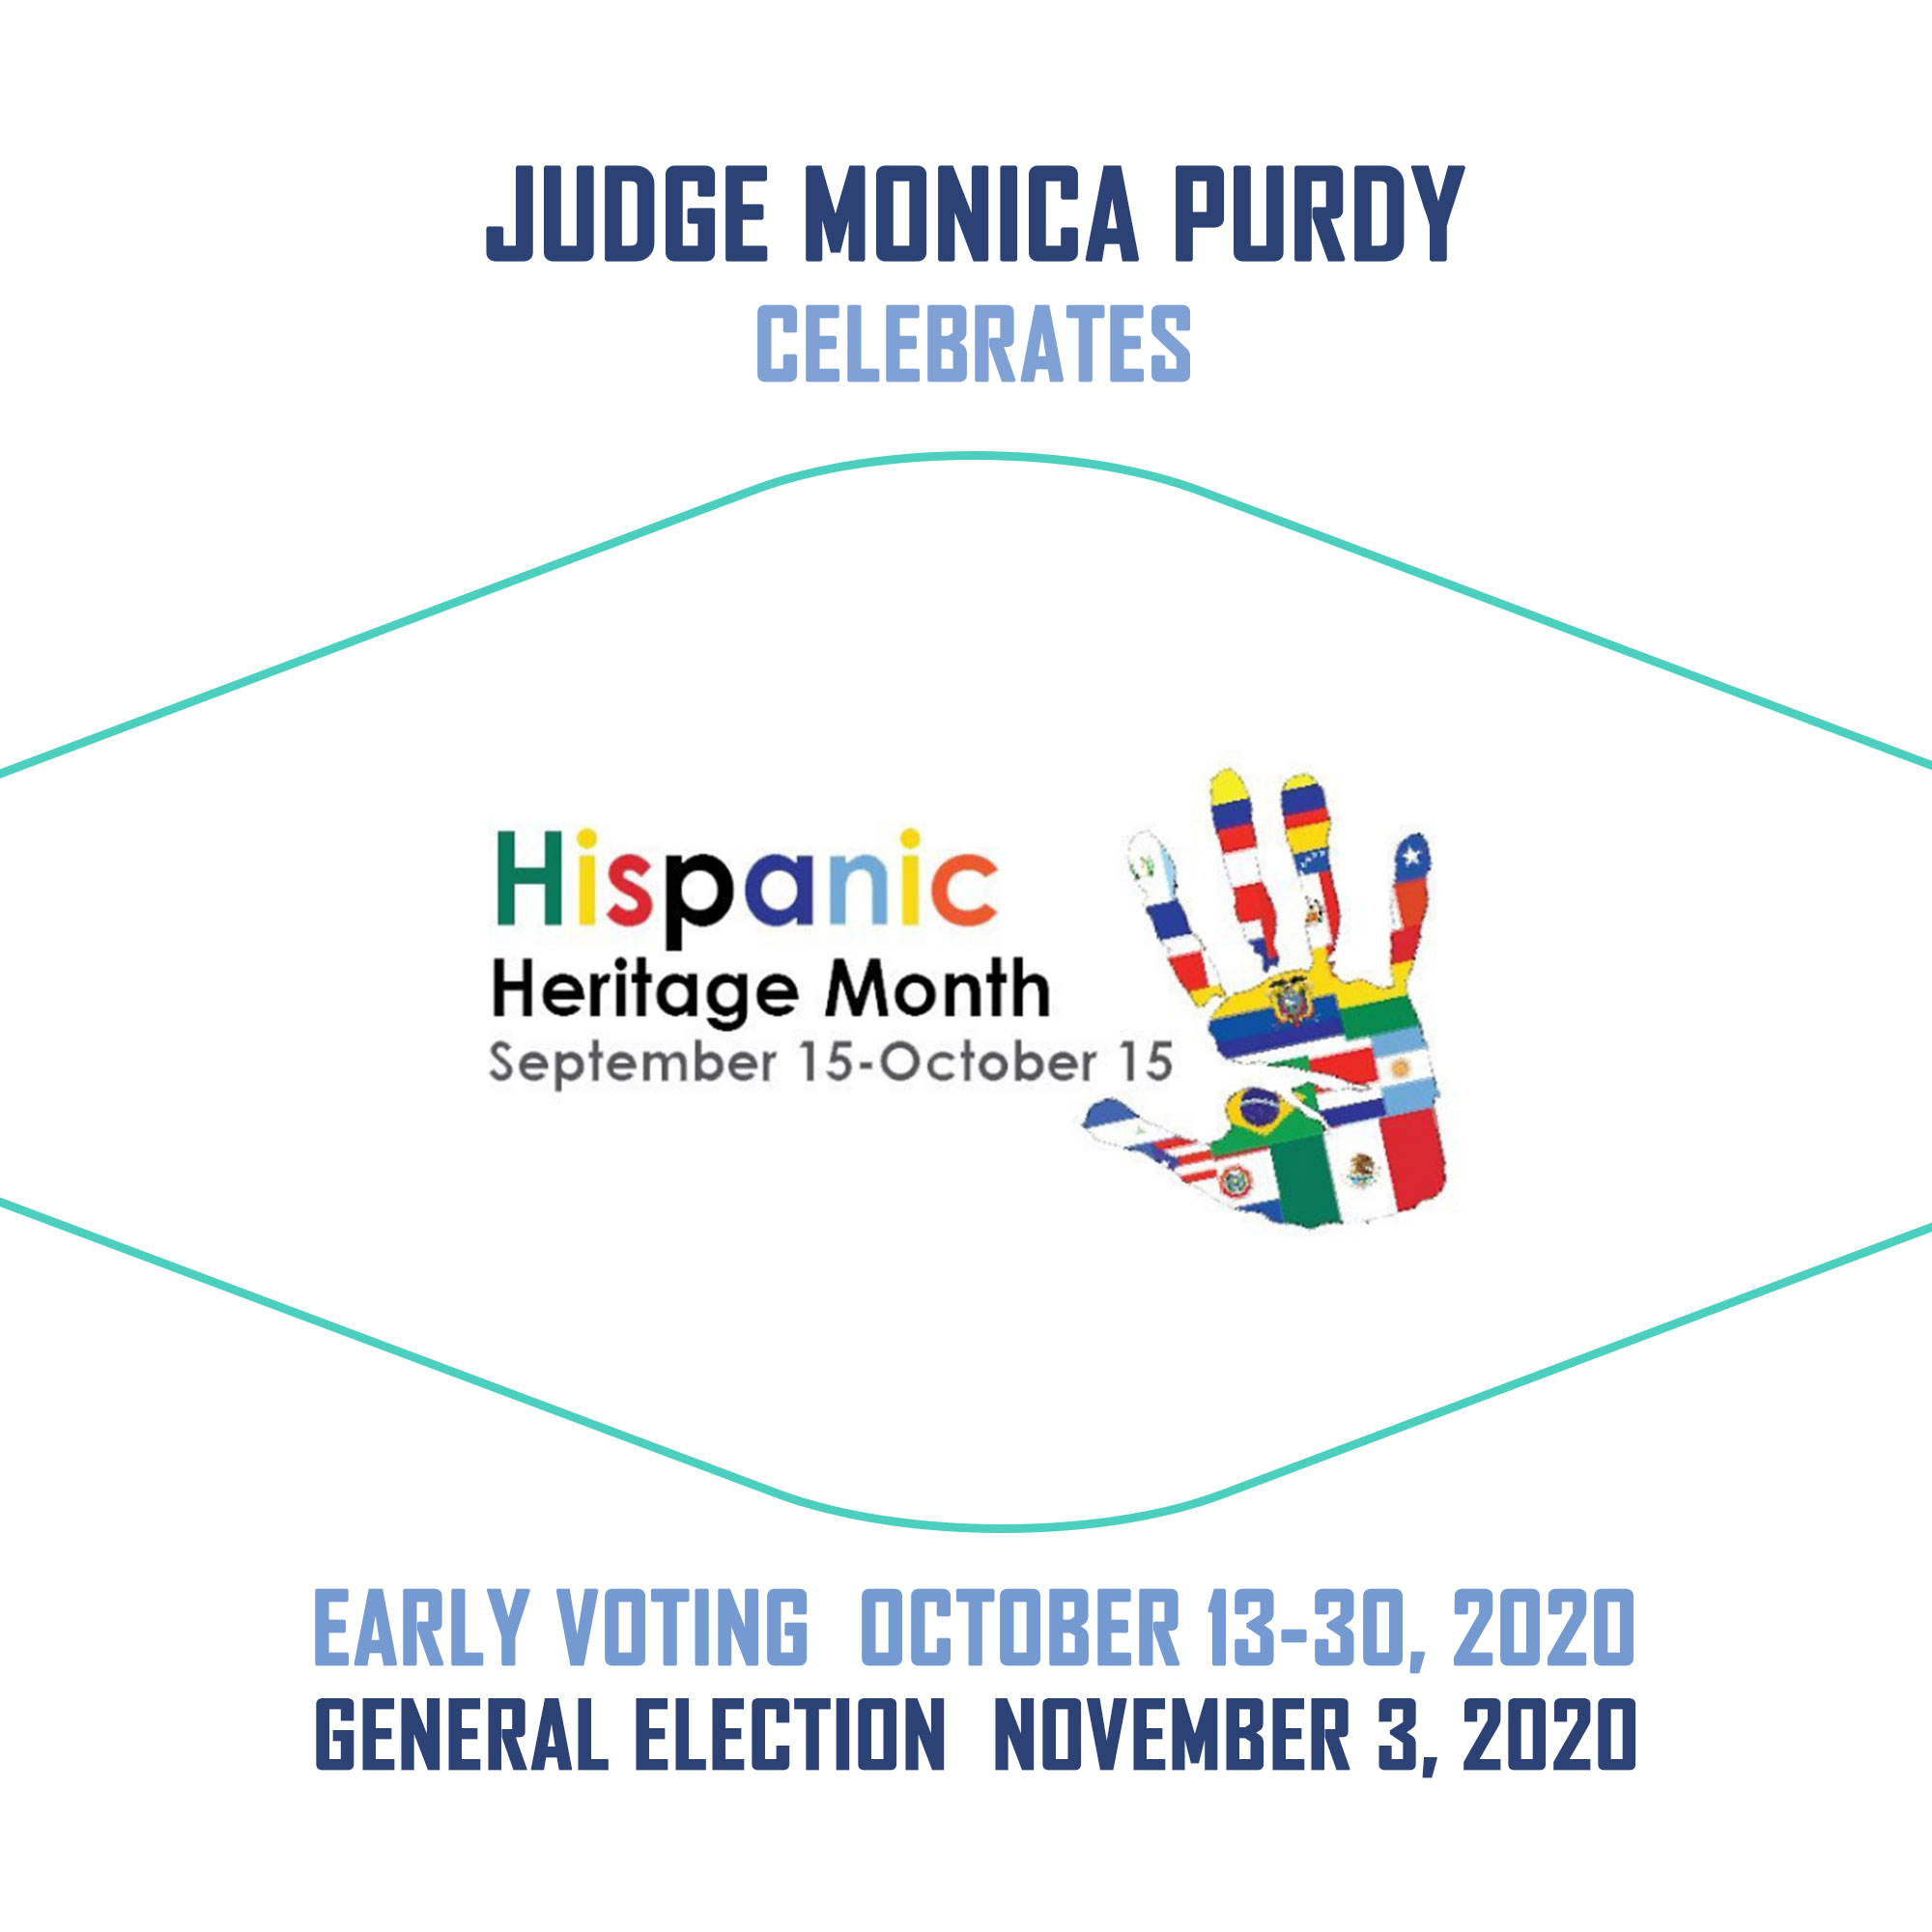 Judge Monica Purdy celebrates Hispanic Heritage Month